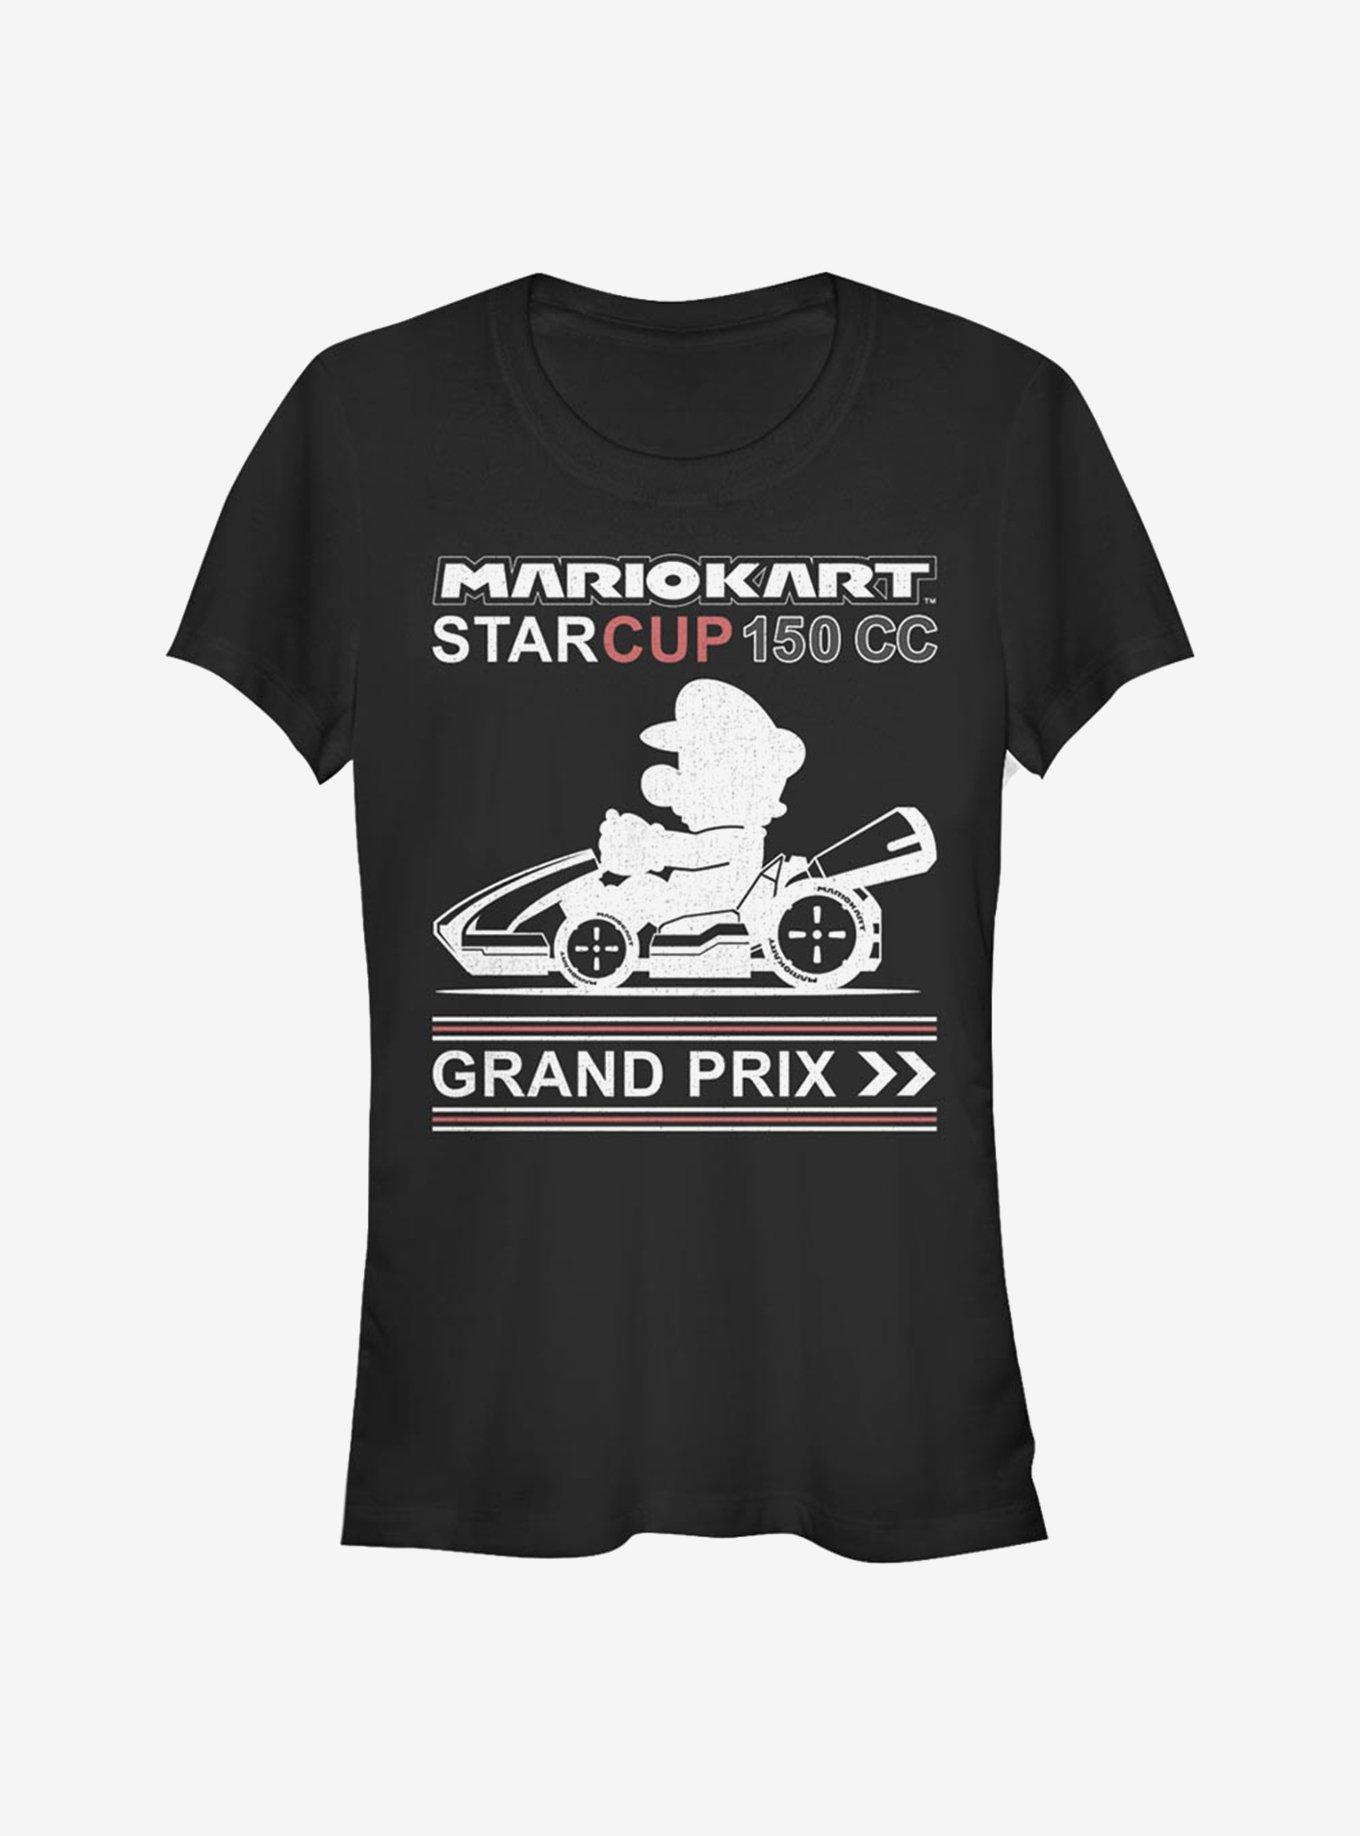 Super Mario Star Cup Girls T-Shirt